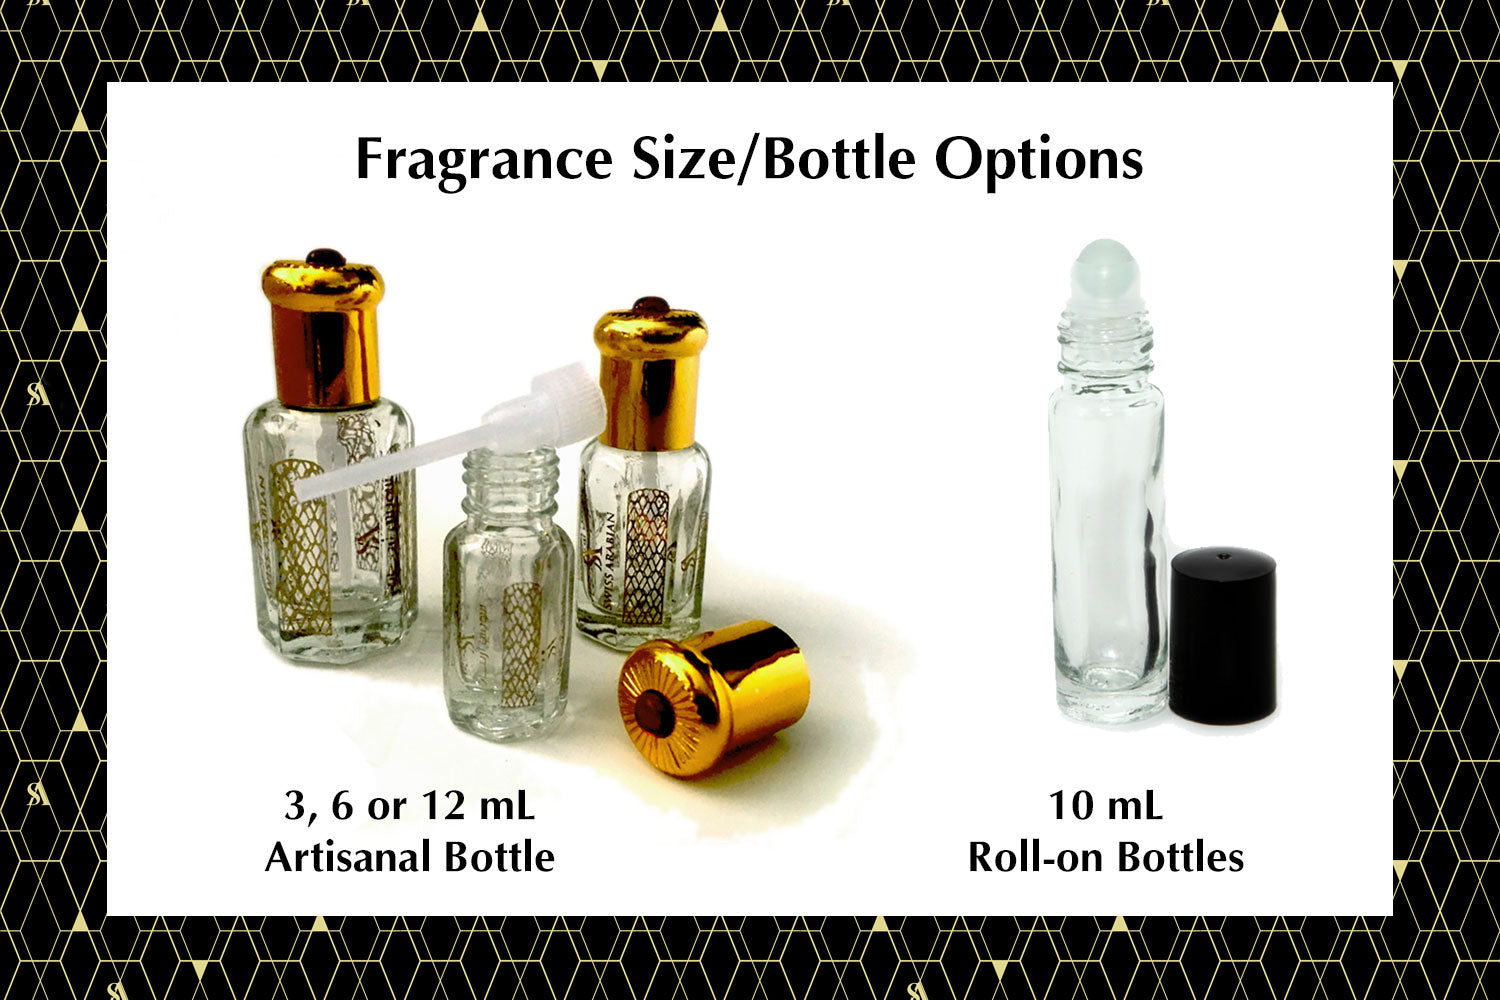 Home Fragrance Oil, 2 Set Jasmine, Oud Essential